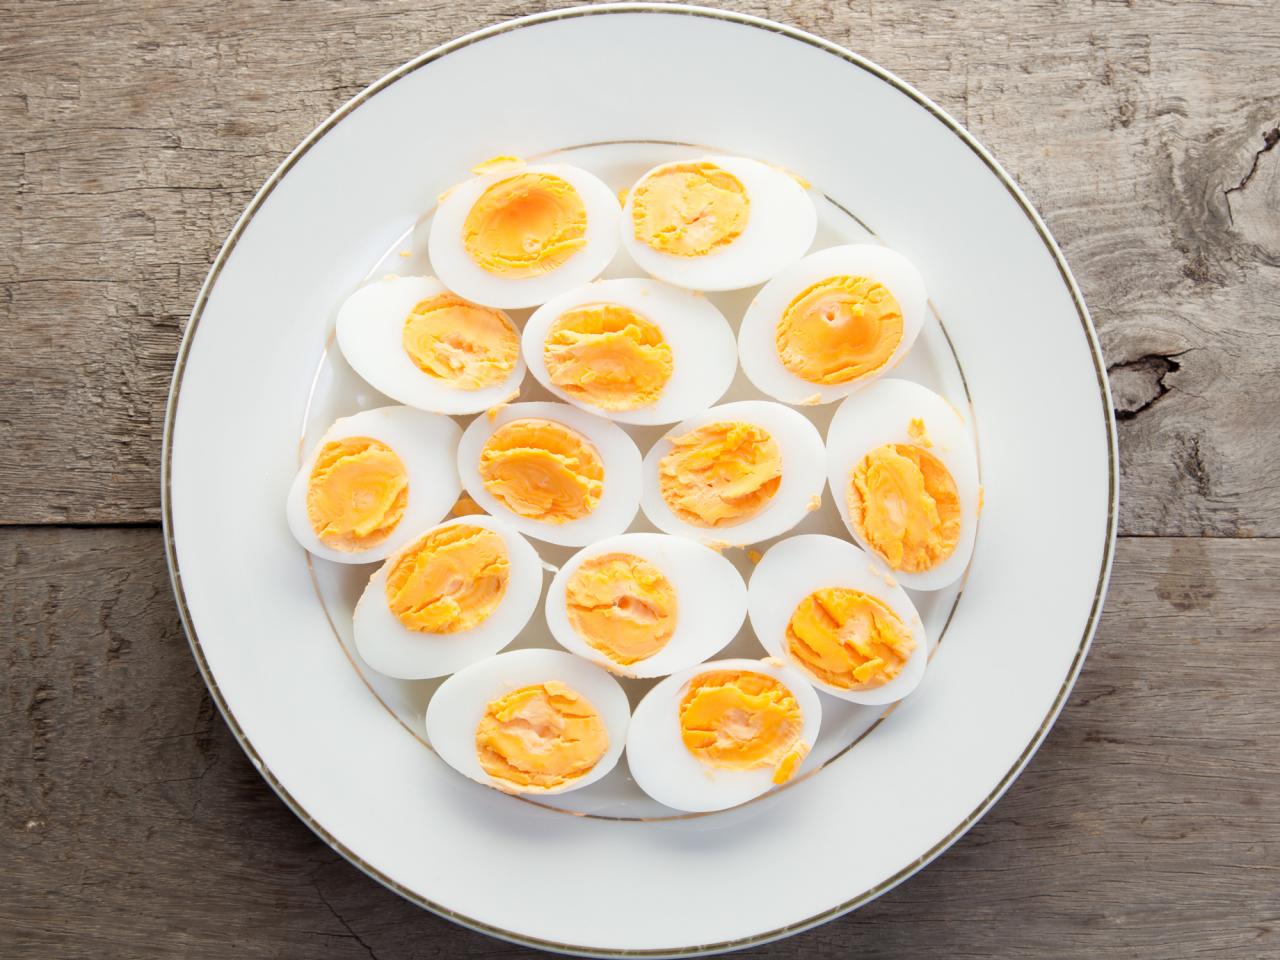 https://food.fnr.sndimg.com/content/dam/images/food/fullset/2020/02/21/he_hard-boiled-eggs-getty_s4x3.jpg.rend.hgtvcom.1280.960.suffix/1582562922873.jpeg